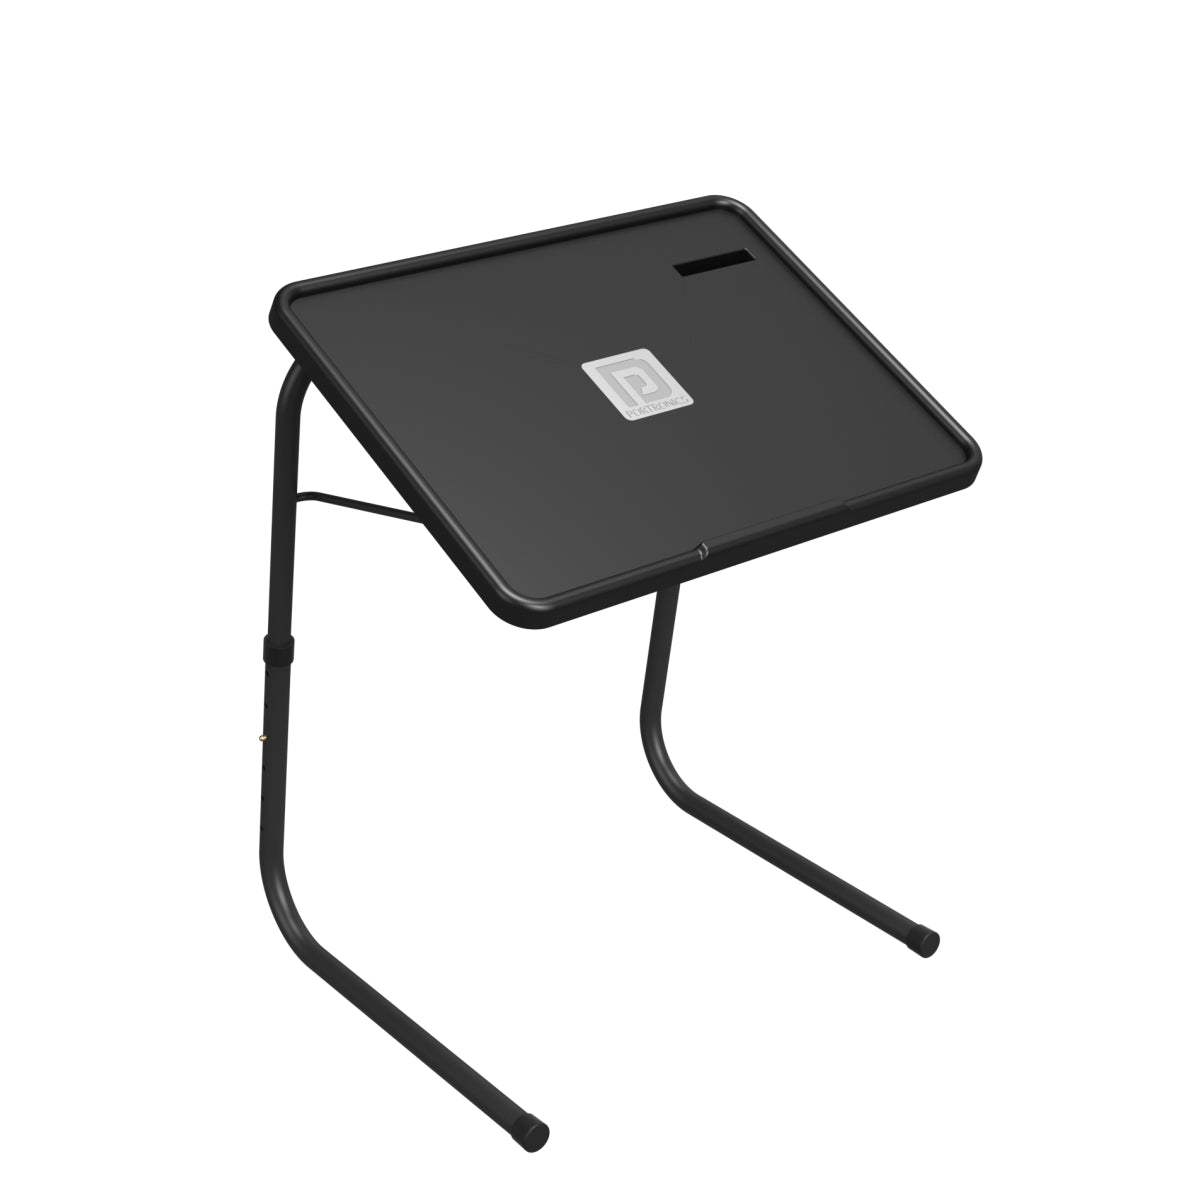 PORTRONICS- My Buddy F Portable Laptop Table